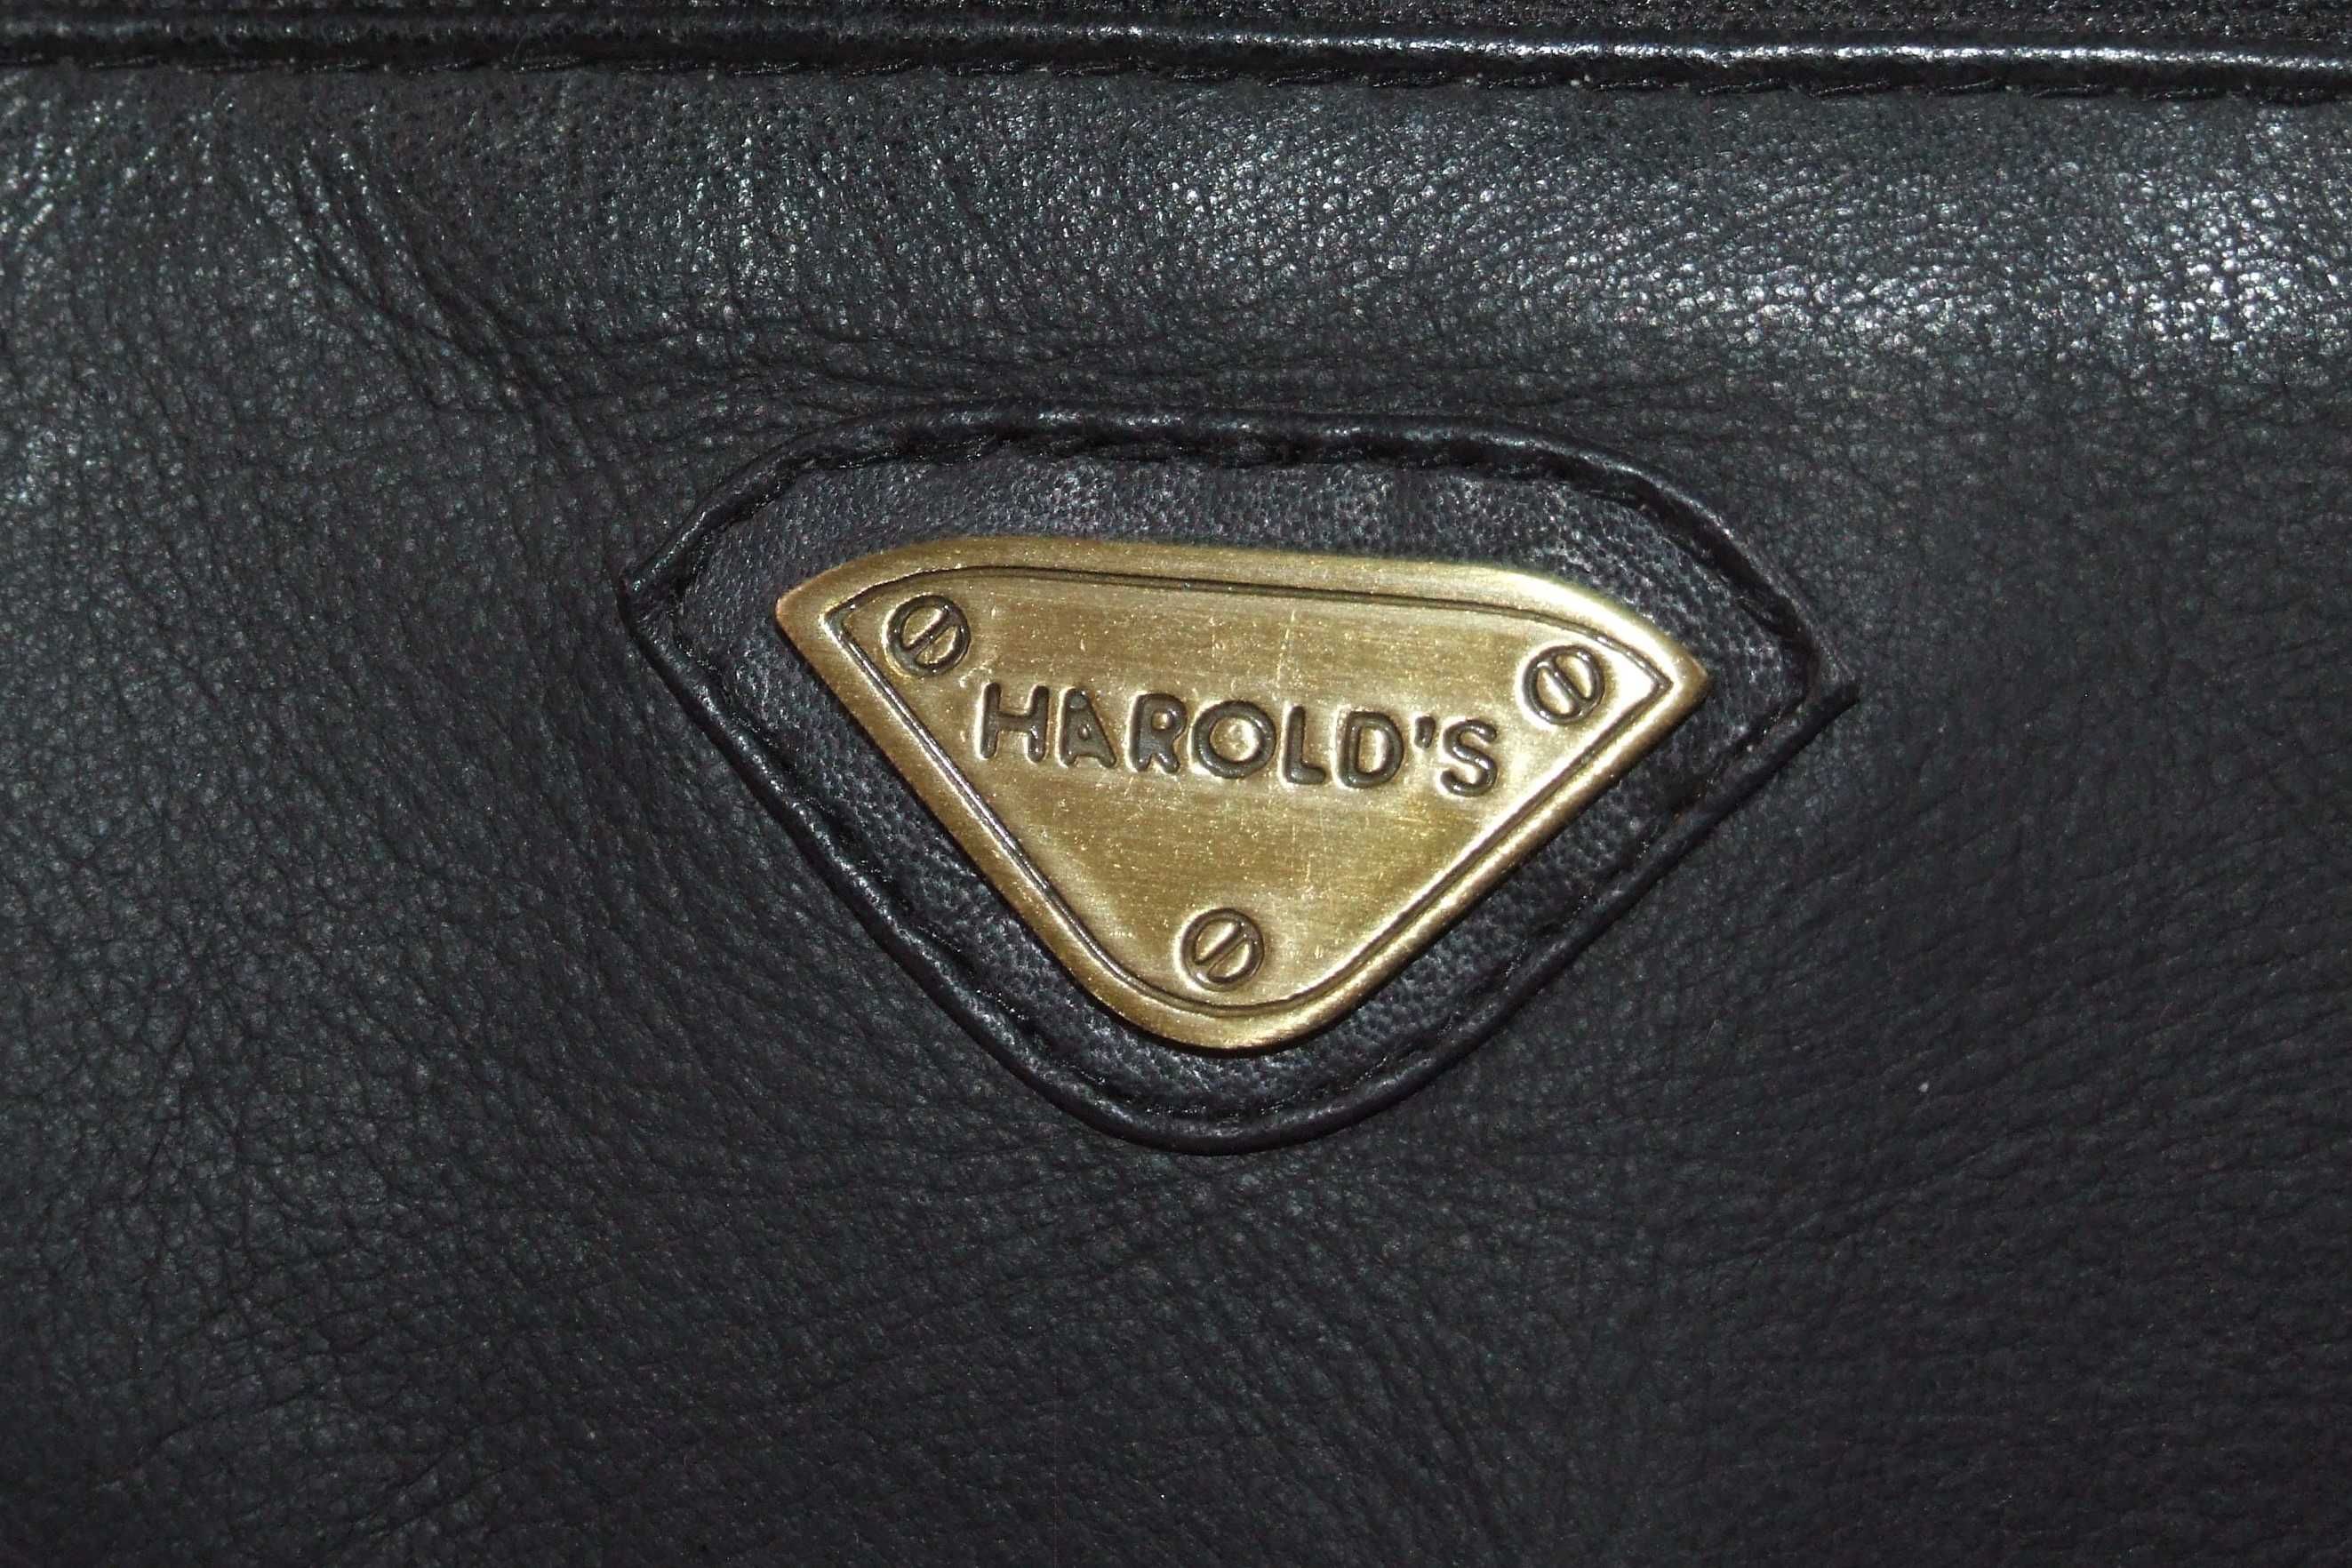 Borseta HAROLD'S, geanta de mana, piele naturala, Made in England NOUA